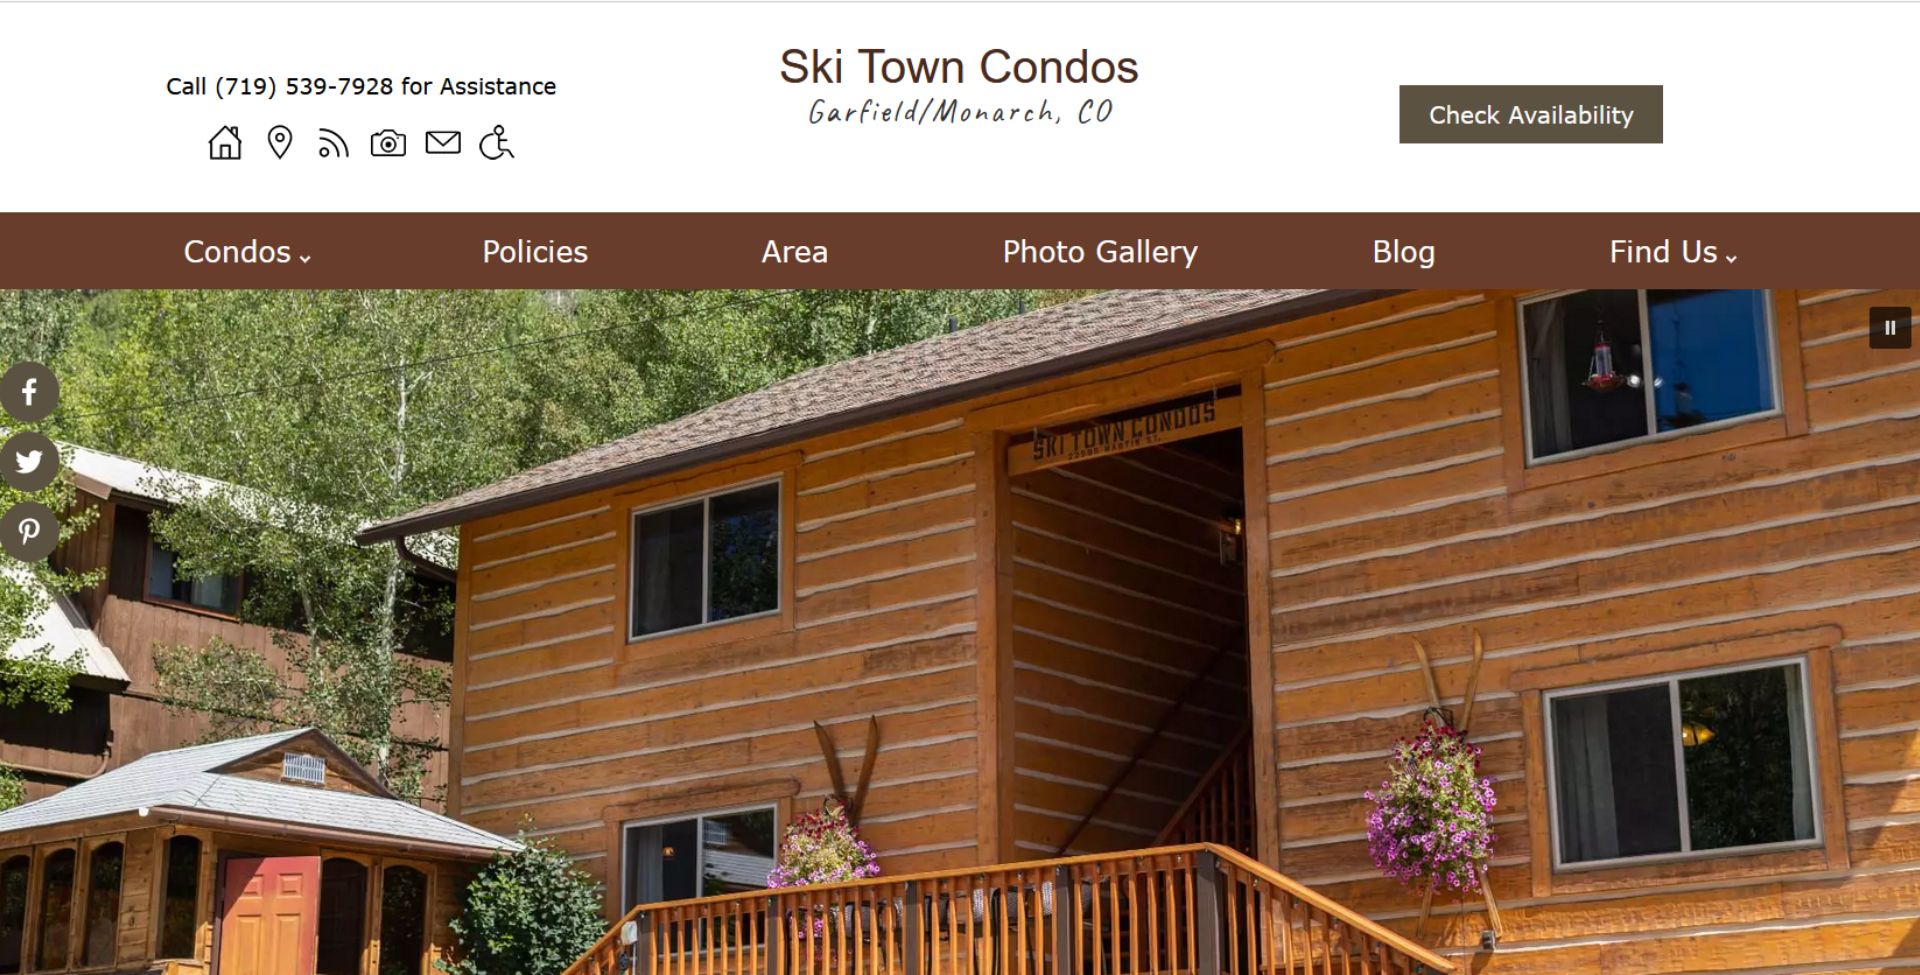 Ski Town Condos website home page